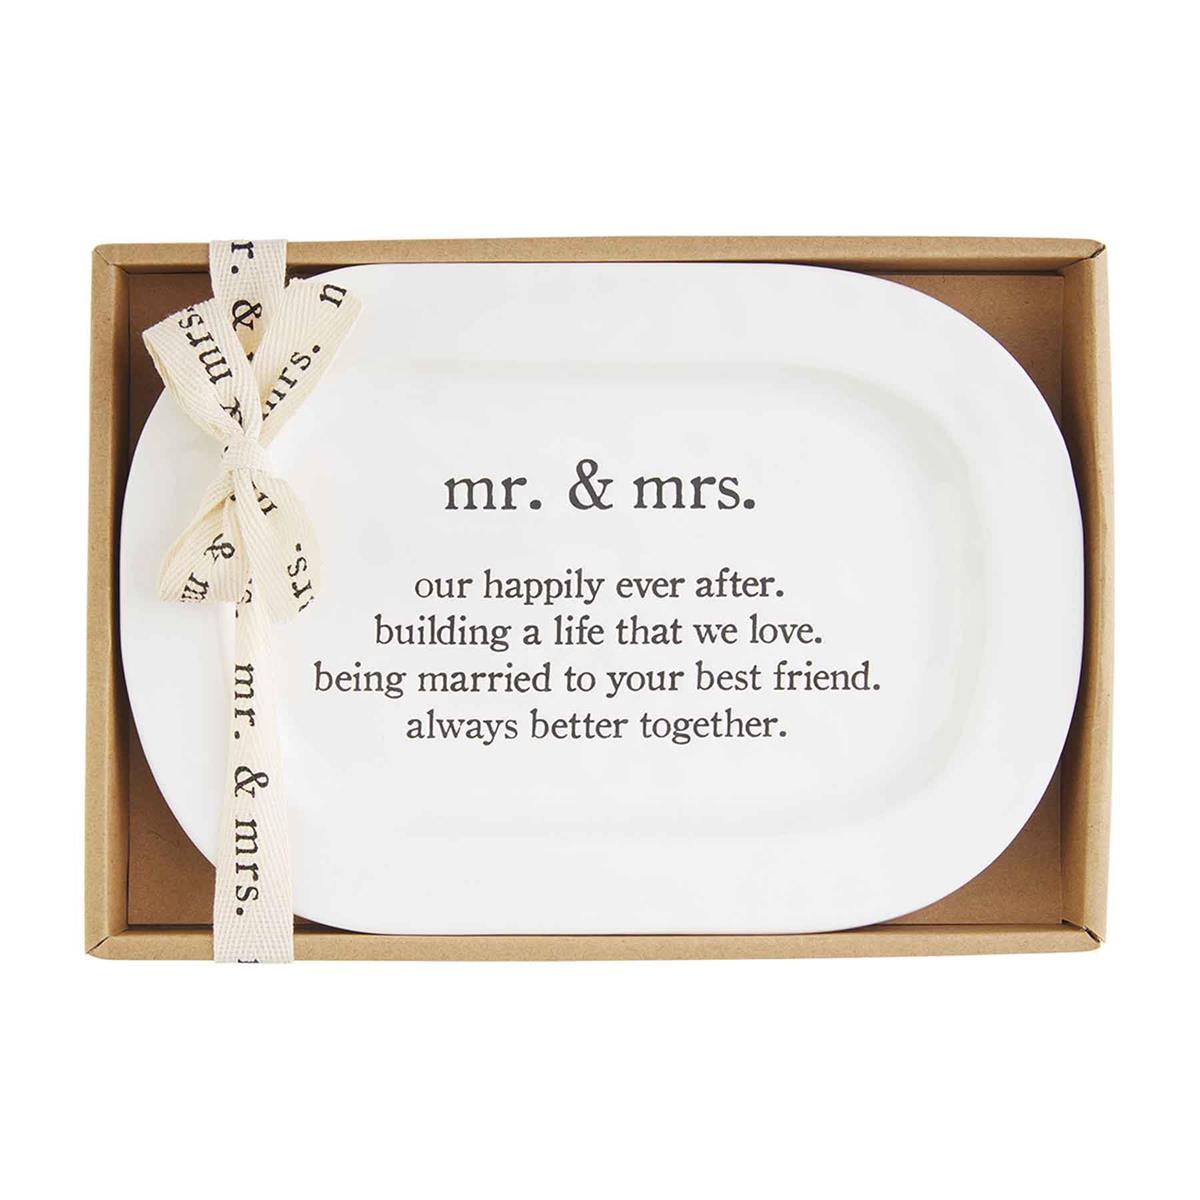 Sentiment Plate - Mr. & Mrs.